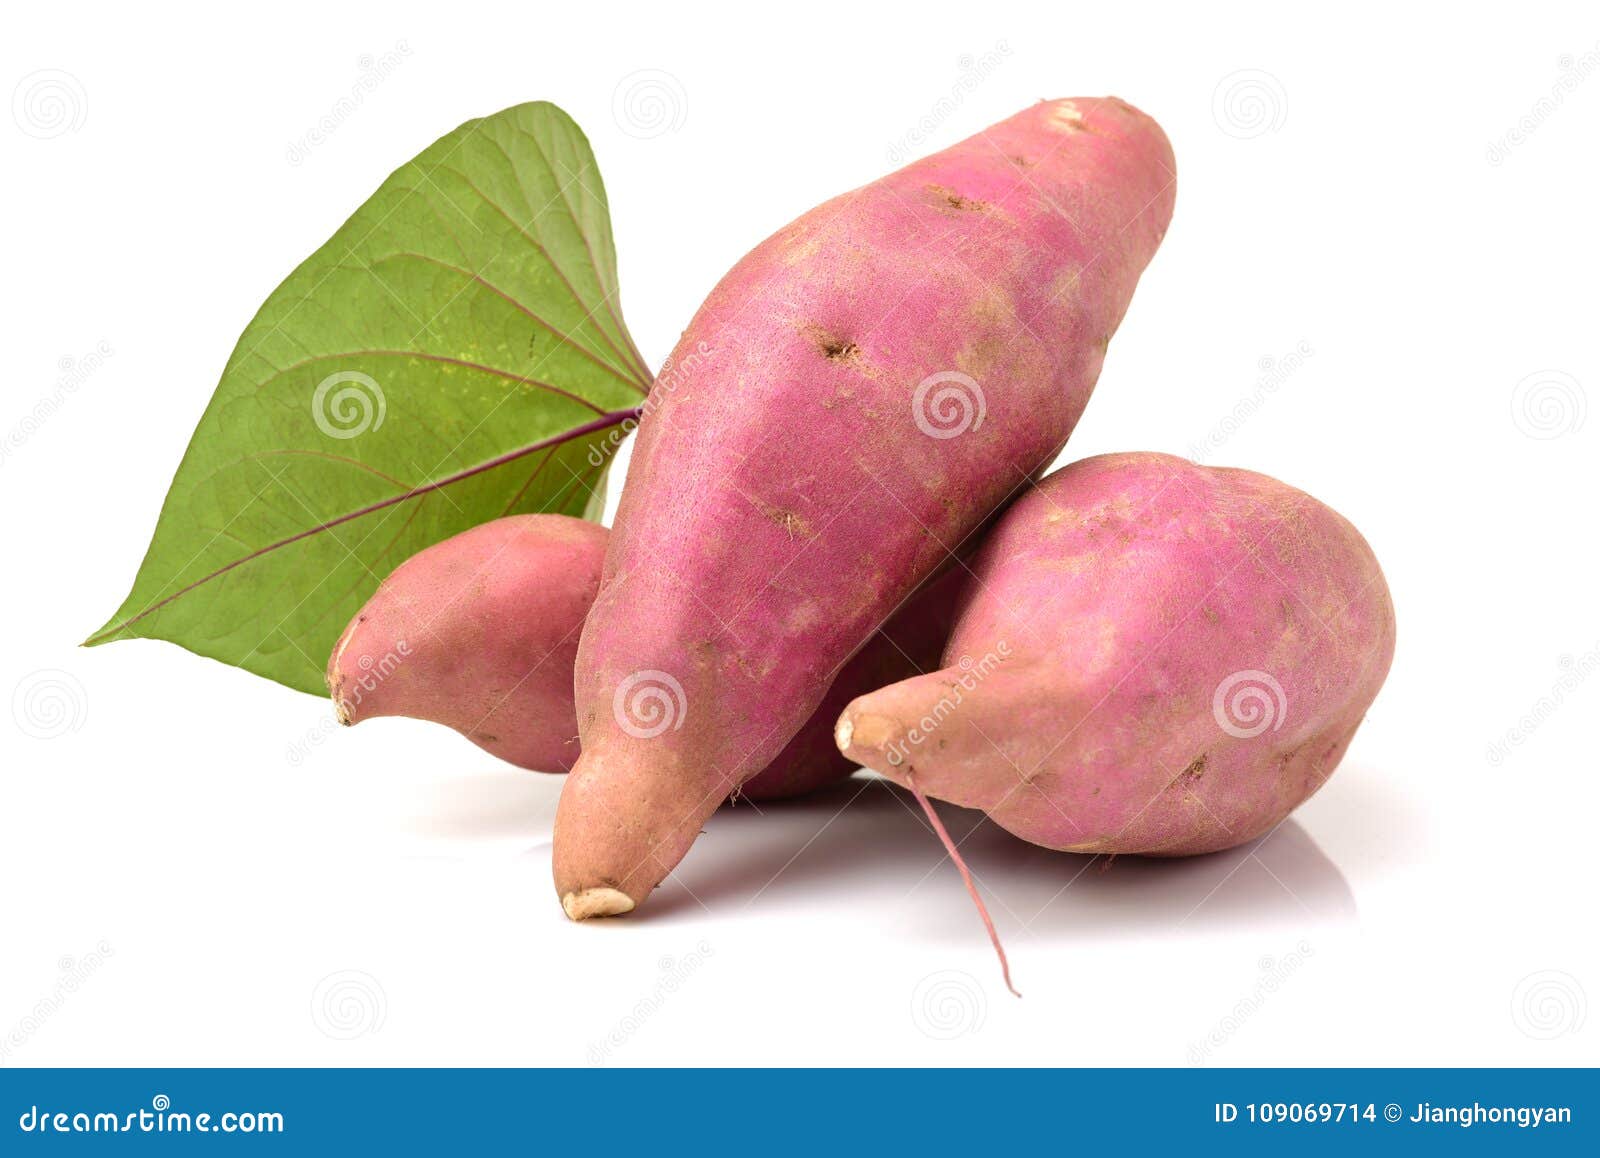 the sweet potato ipomoea batatas or batat